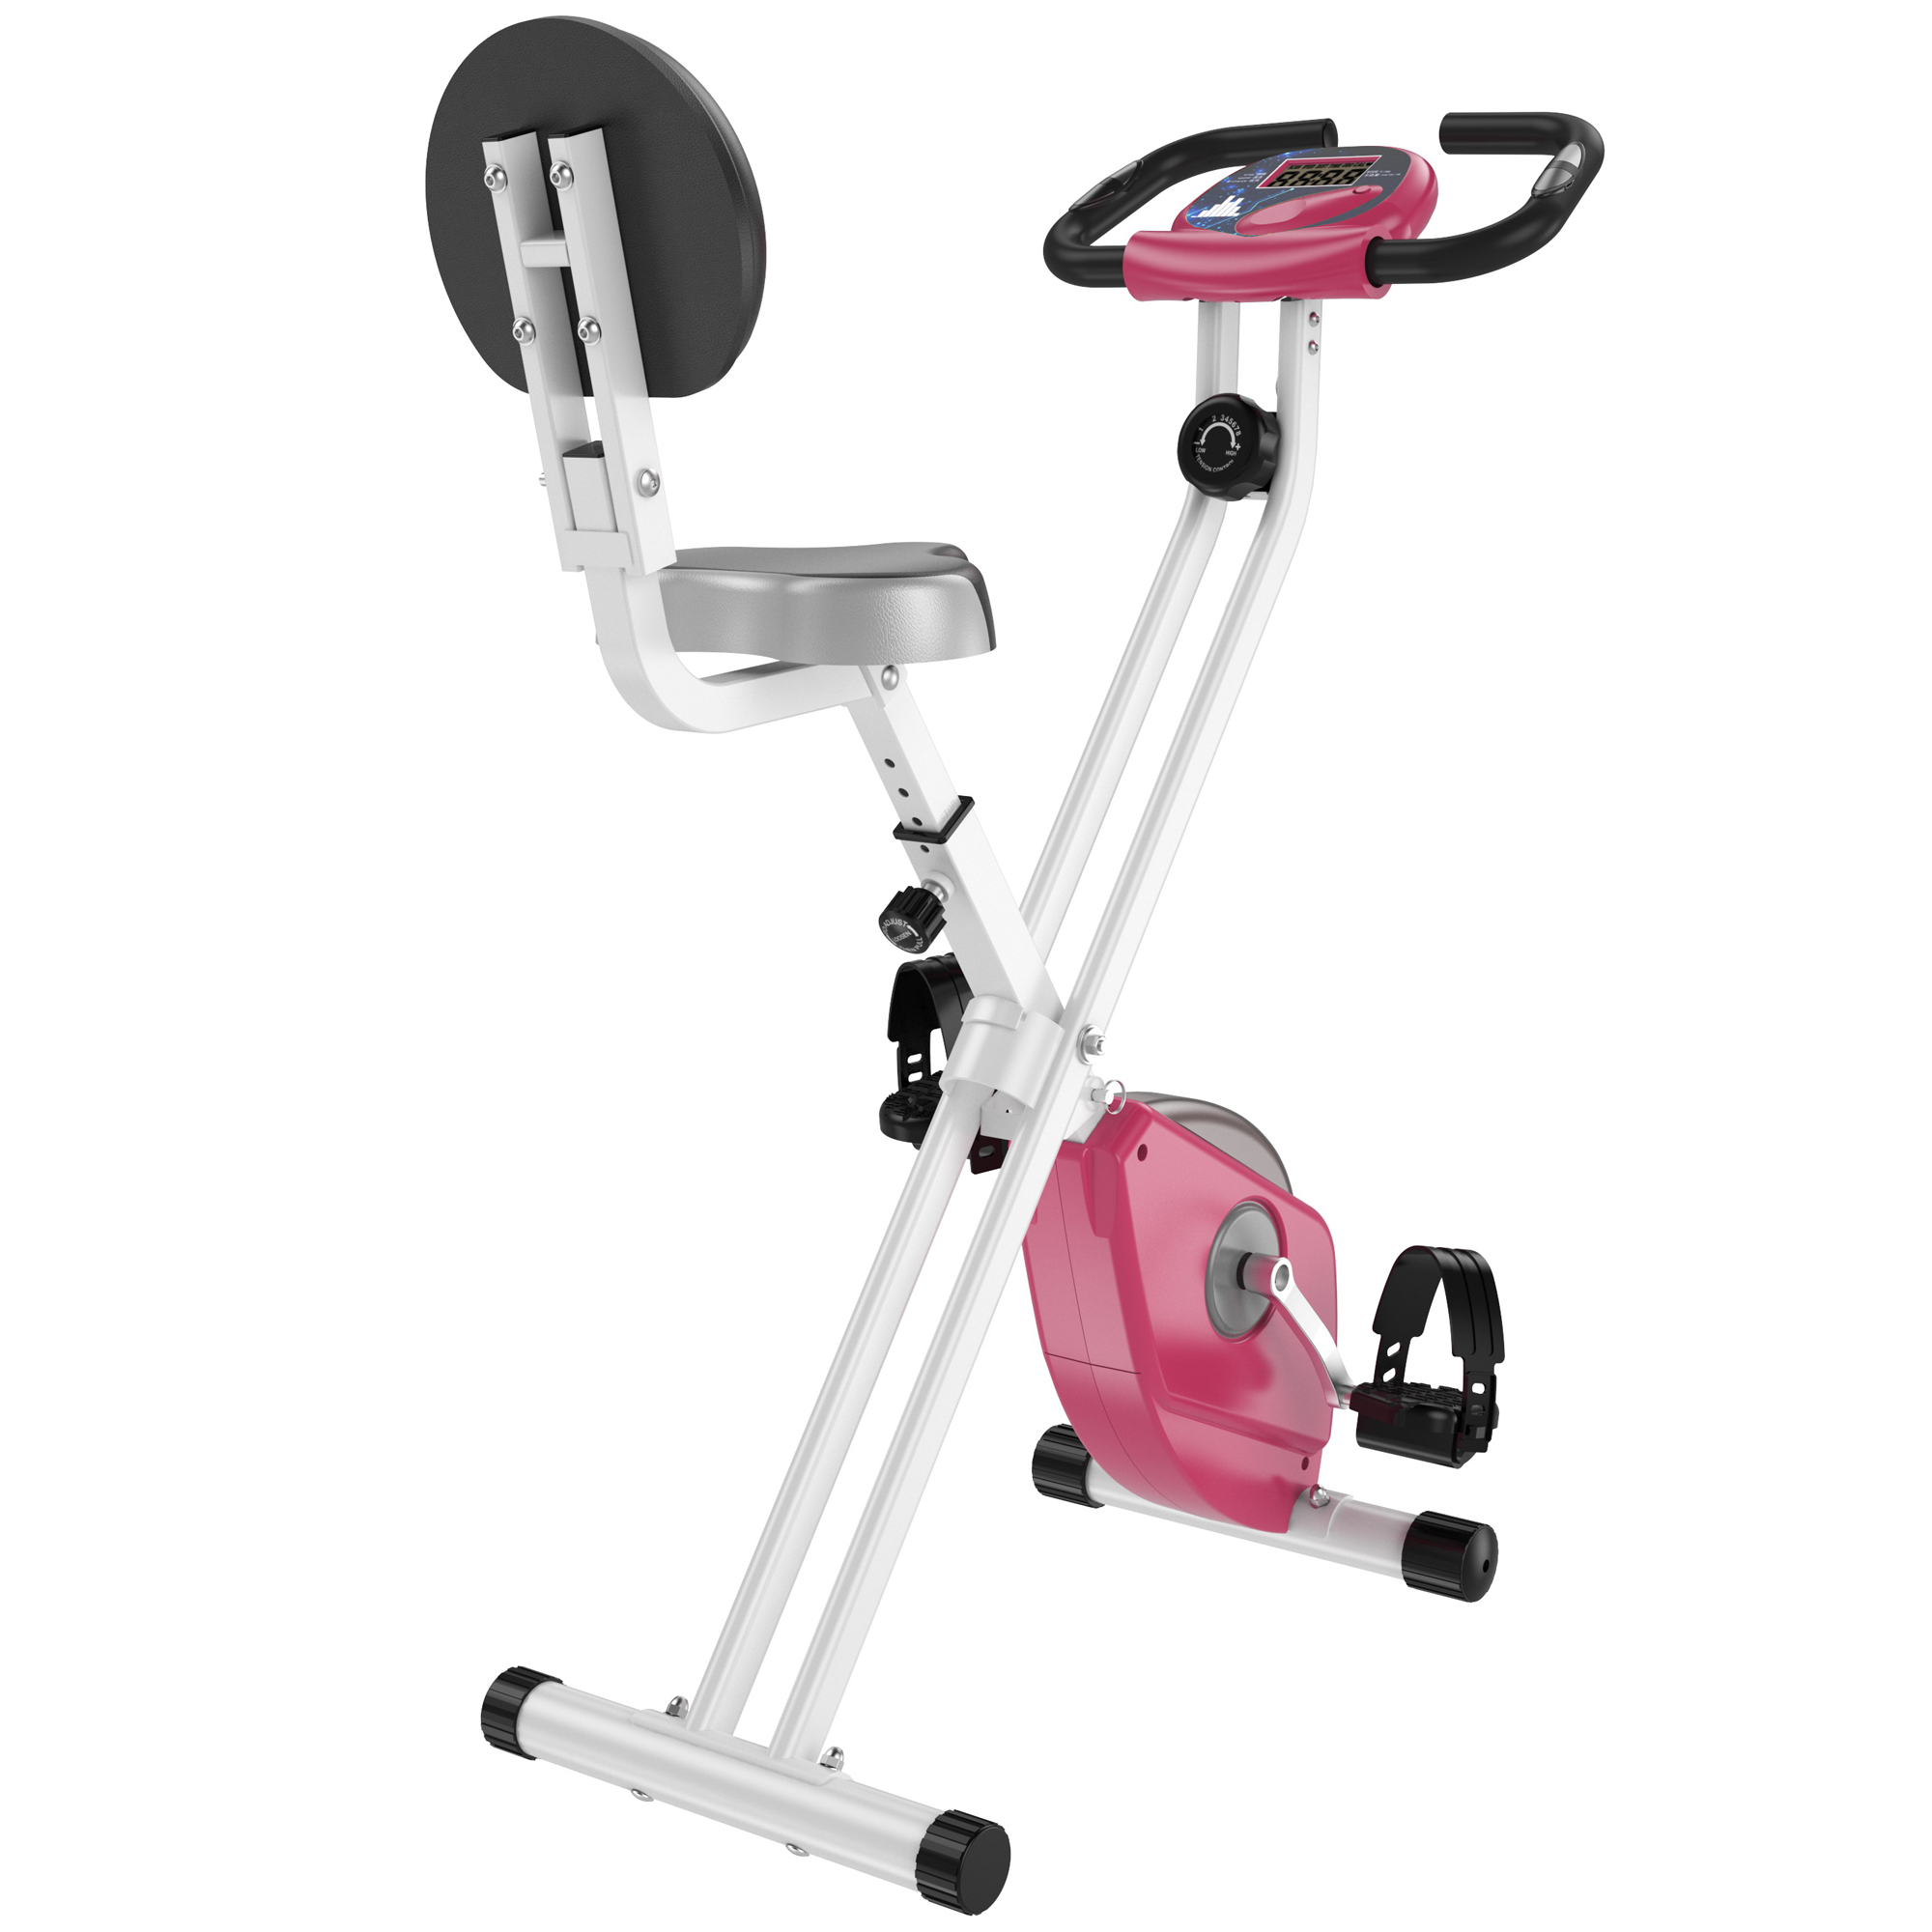 Homcom Bicicleta Para ejercicios profesional vertical plegable de forma con 8 niveles asiento altura ajustable acero 43x97x109 cm rojo rosa a90·192gn 43x97x109cm